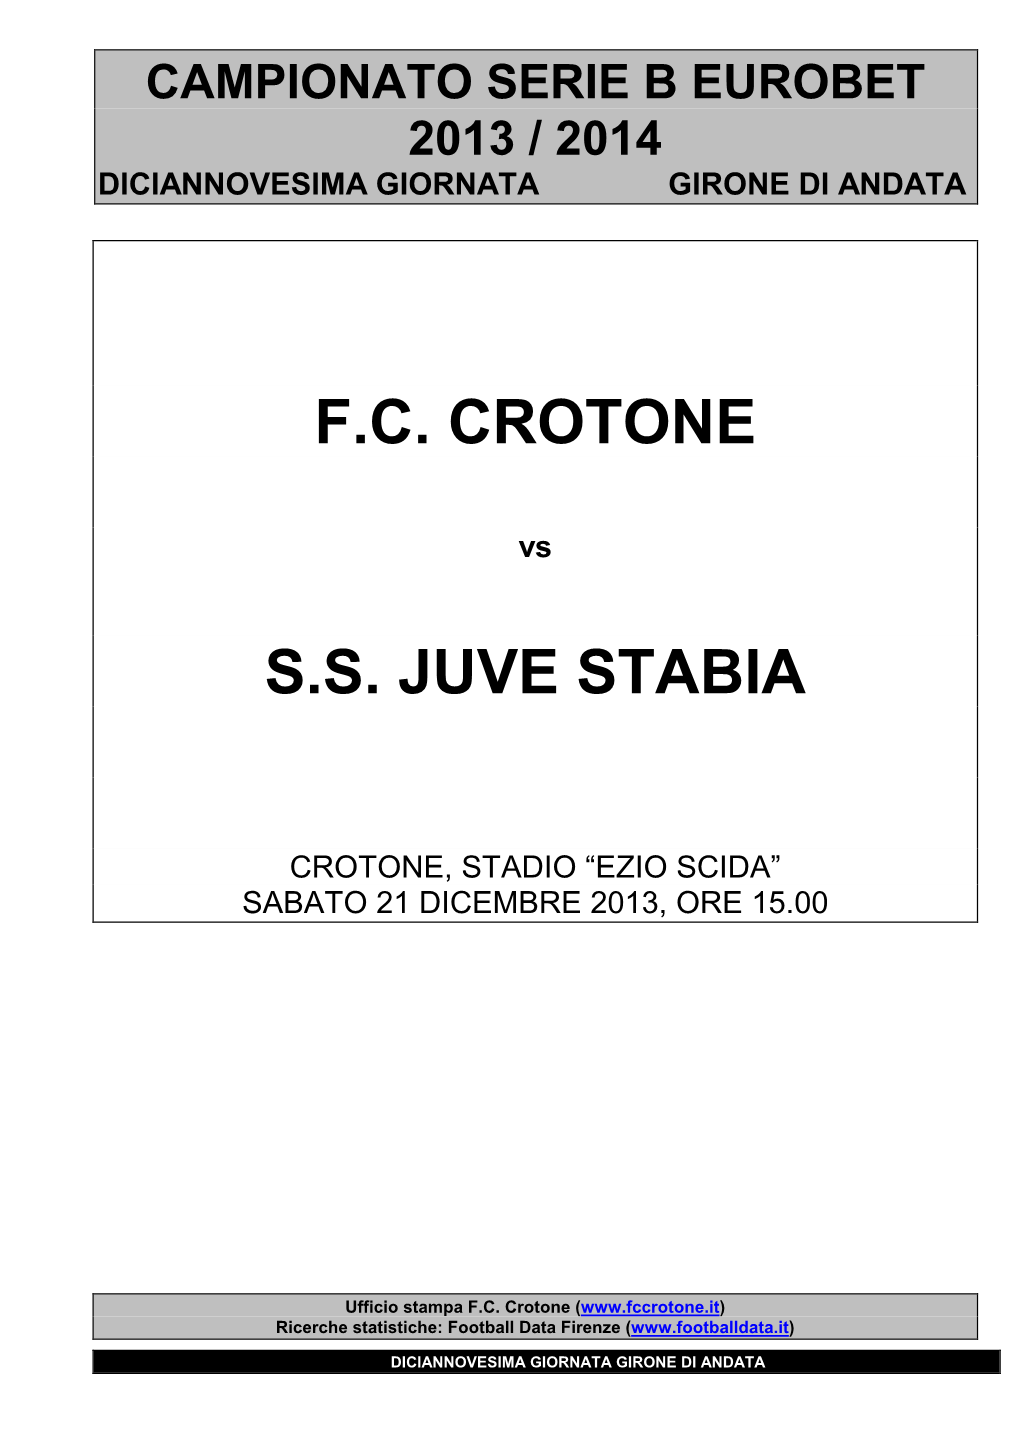 Crotone-Juve Stabia